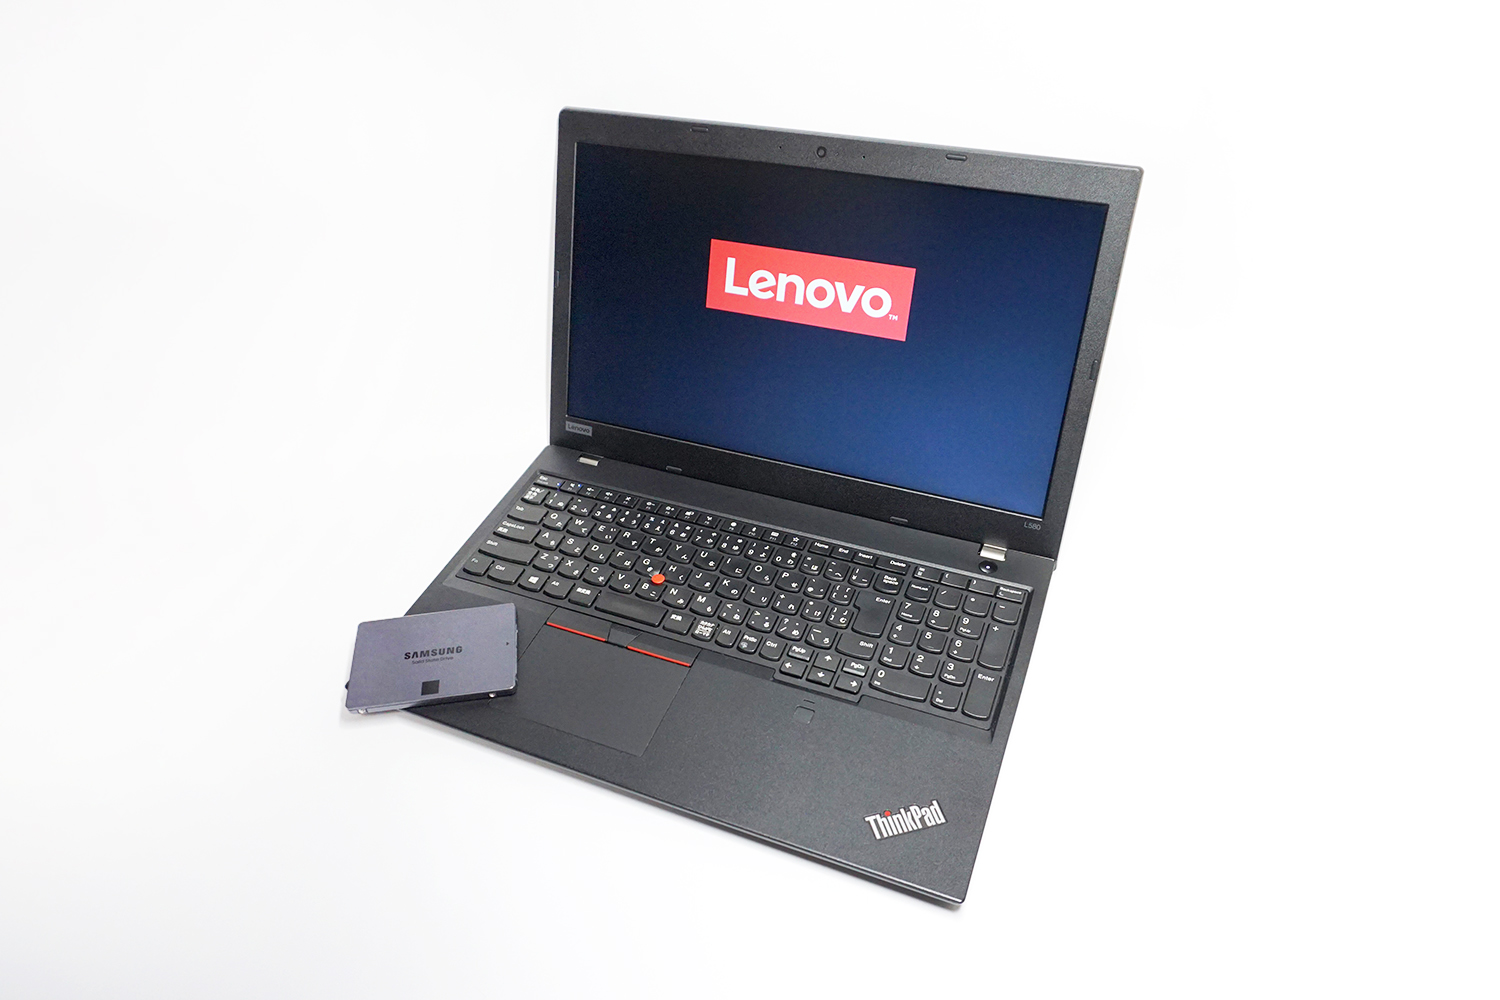 SSD換装レビュー読者プレゼント -1TB SSD換装済み「Lenovo ThinkPad ...